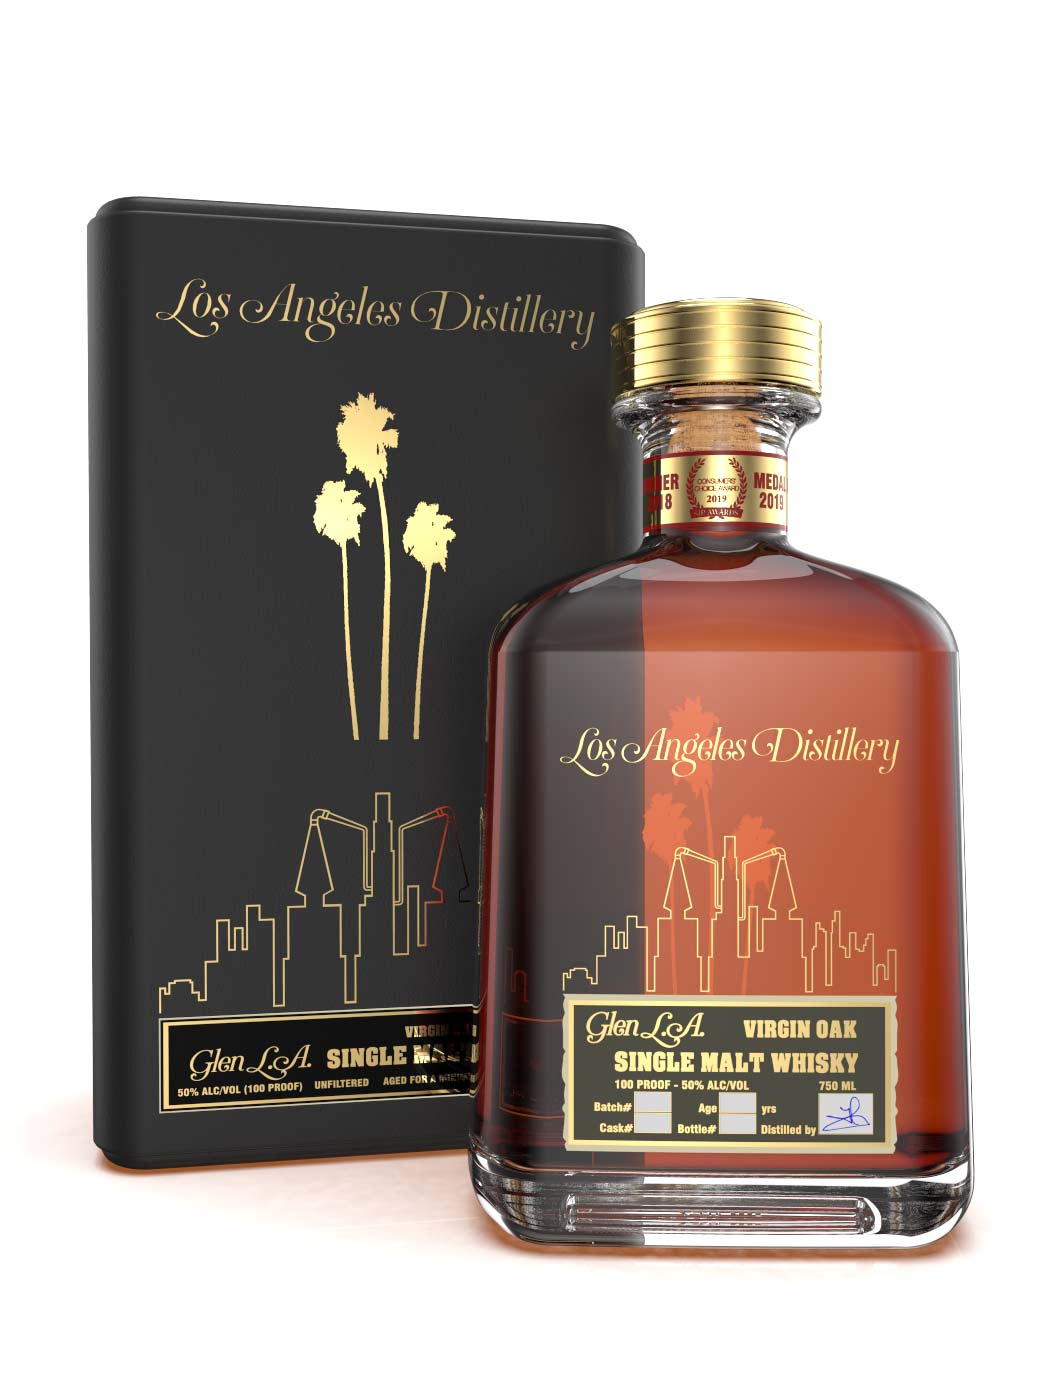 Los Angeles Distillery's Virgin Oak Single Malt Whisky in the Collector's Box